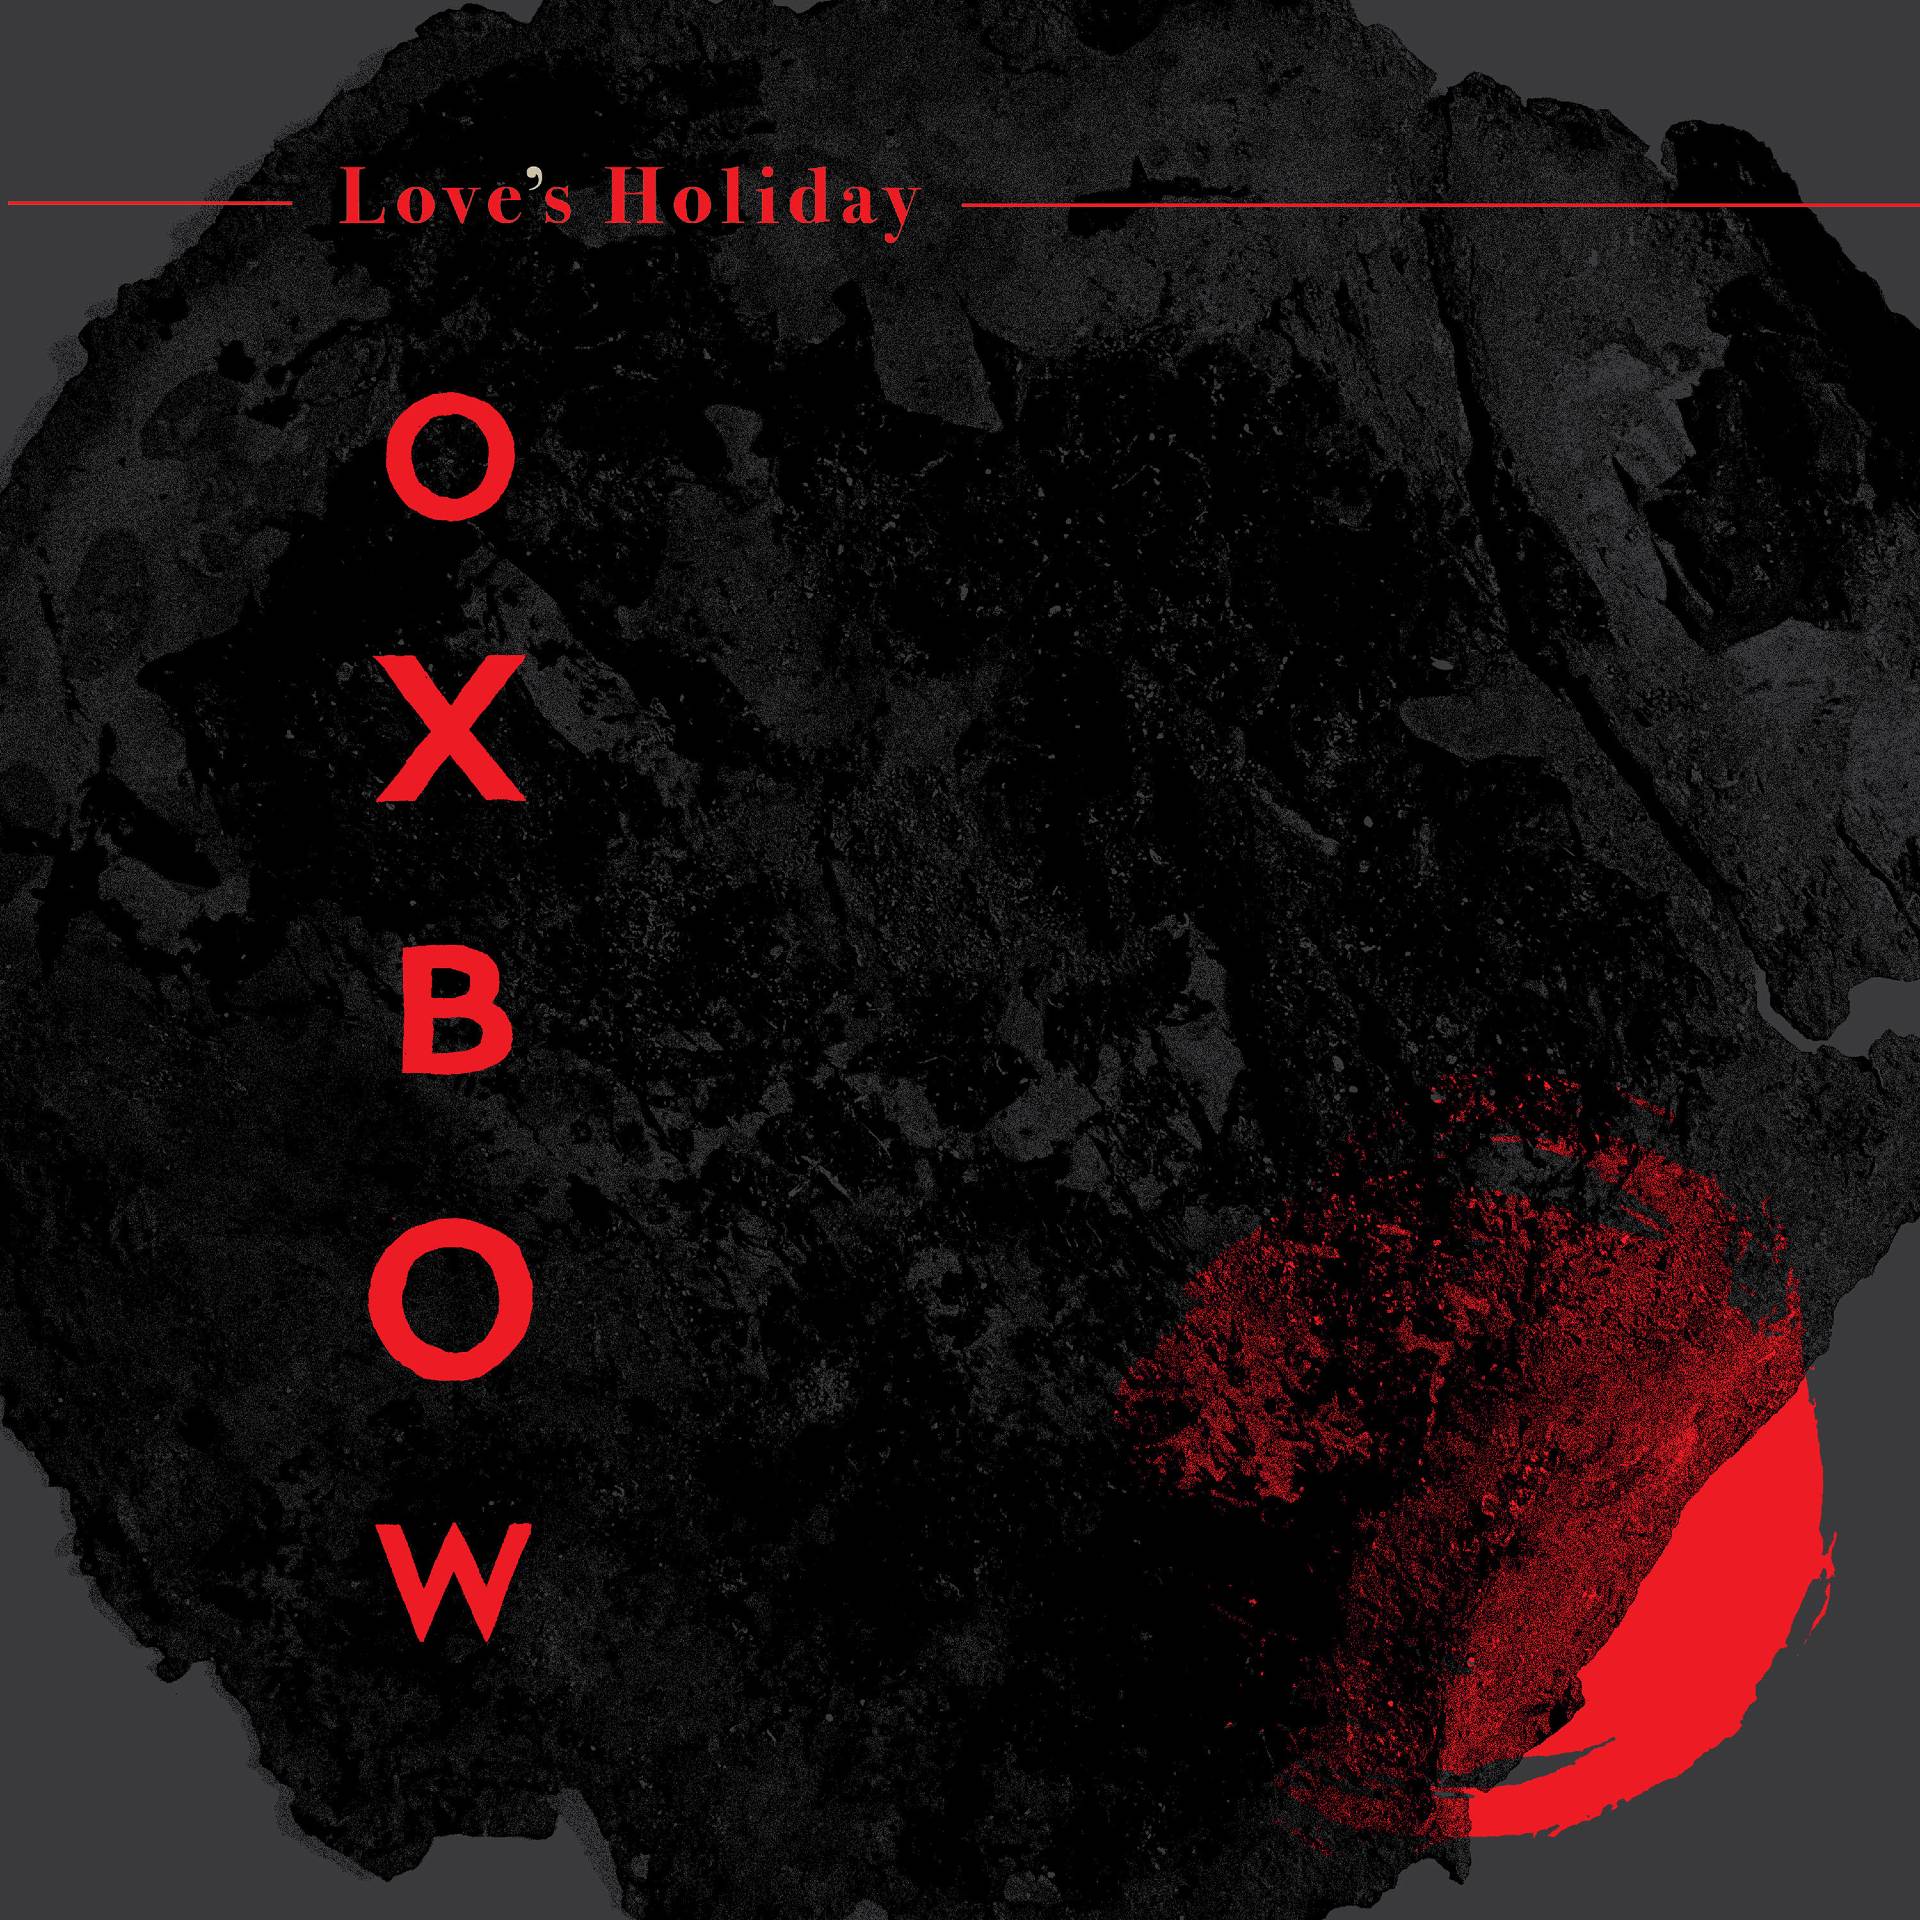 Oxbow ‘Love’s Holiday’ album artwork